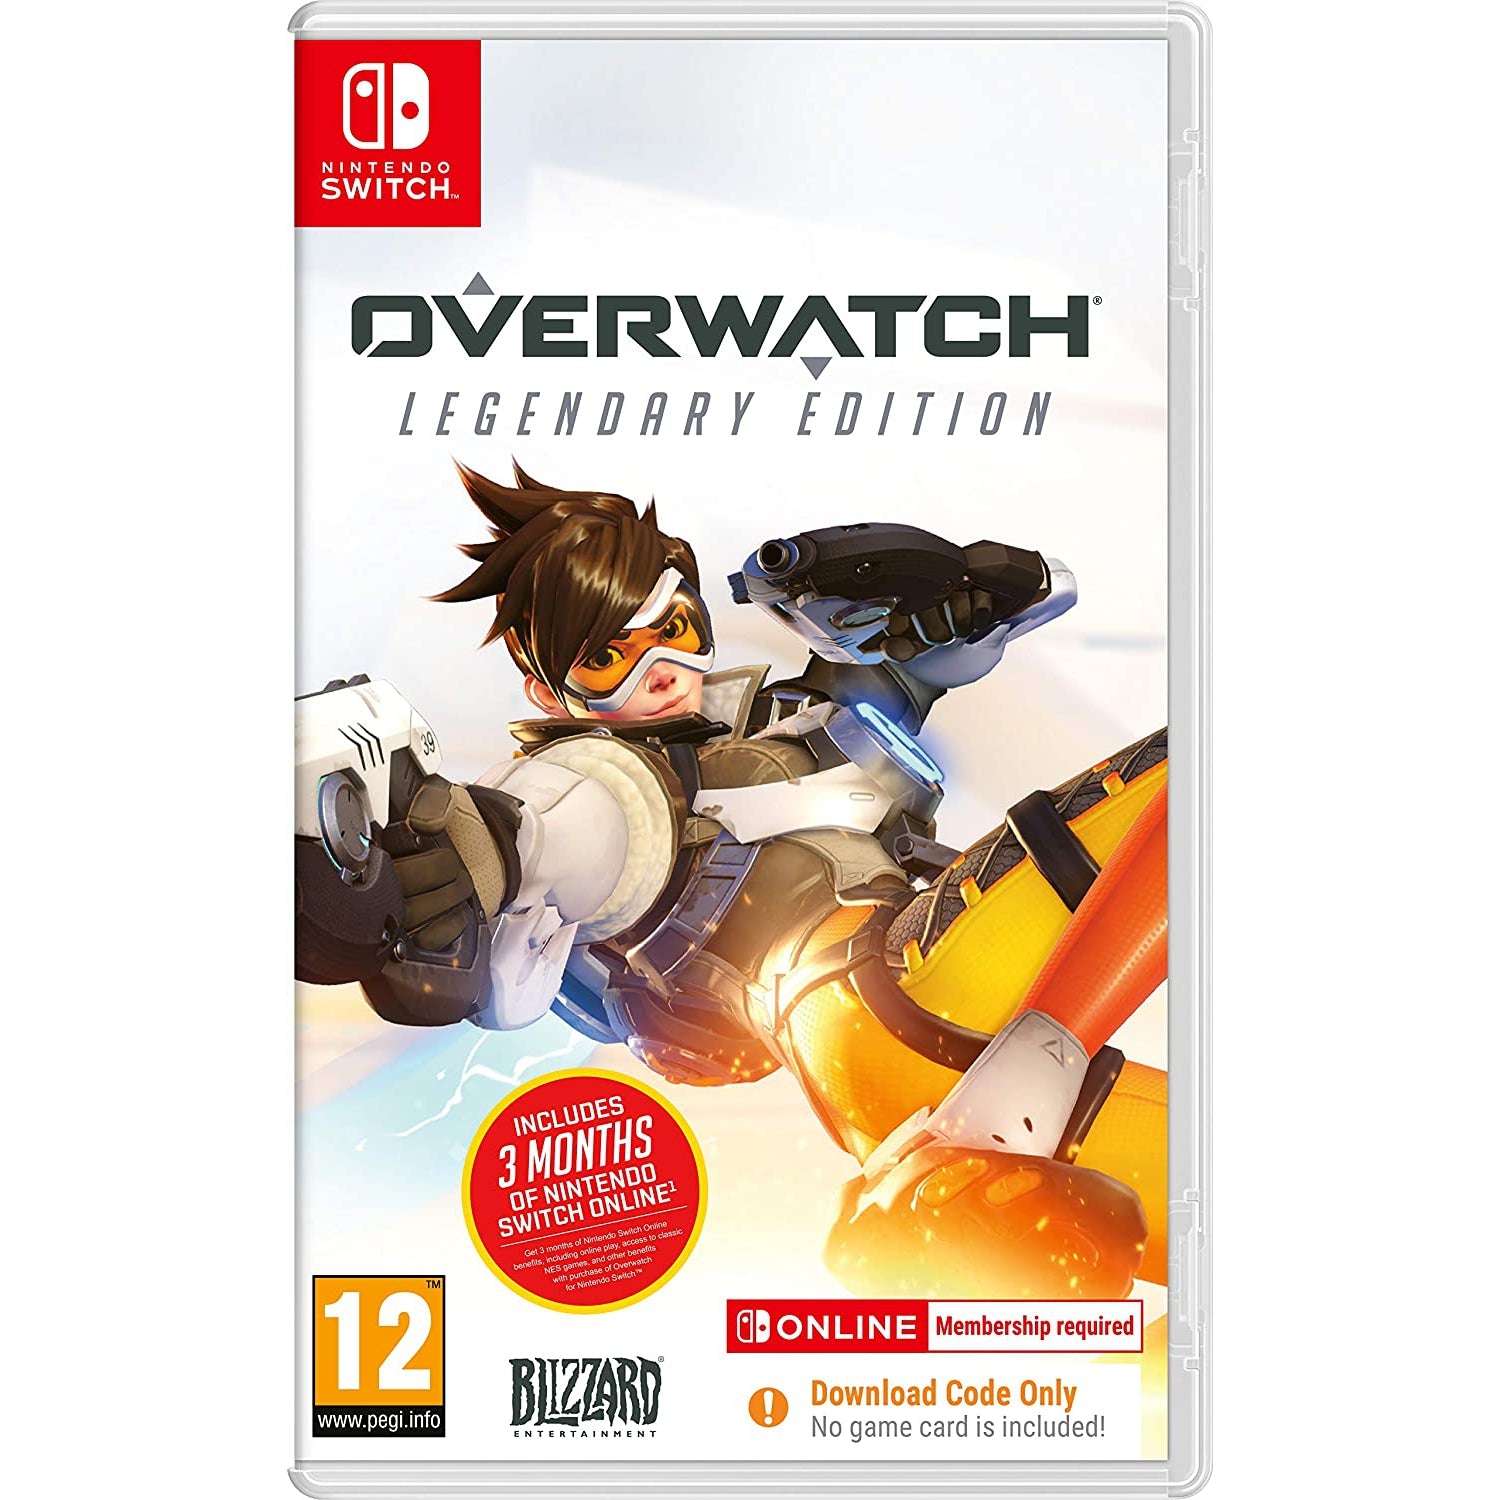 Overwatch Legendary Edition (Nintendo Switch) - [DIGITAL CODE EDITION]